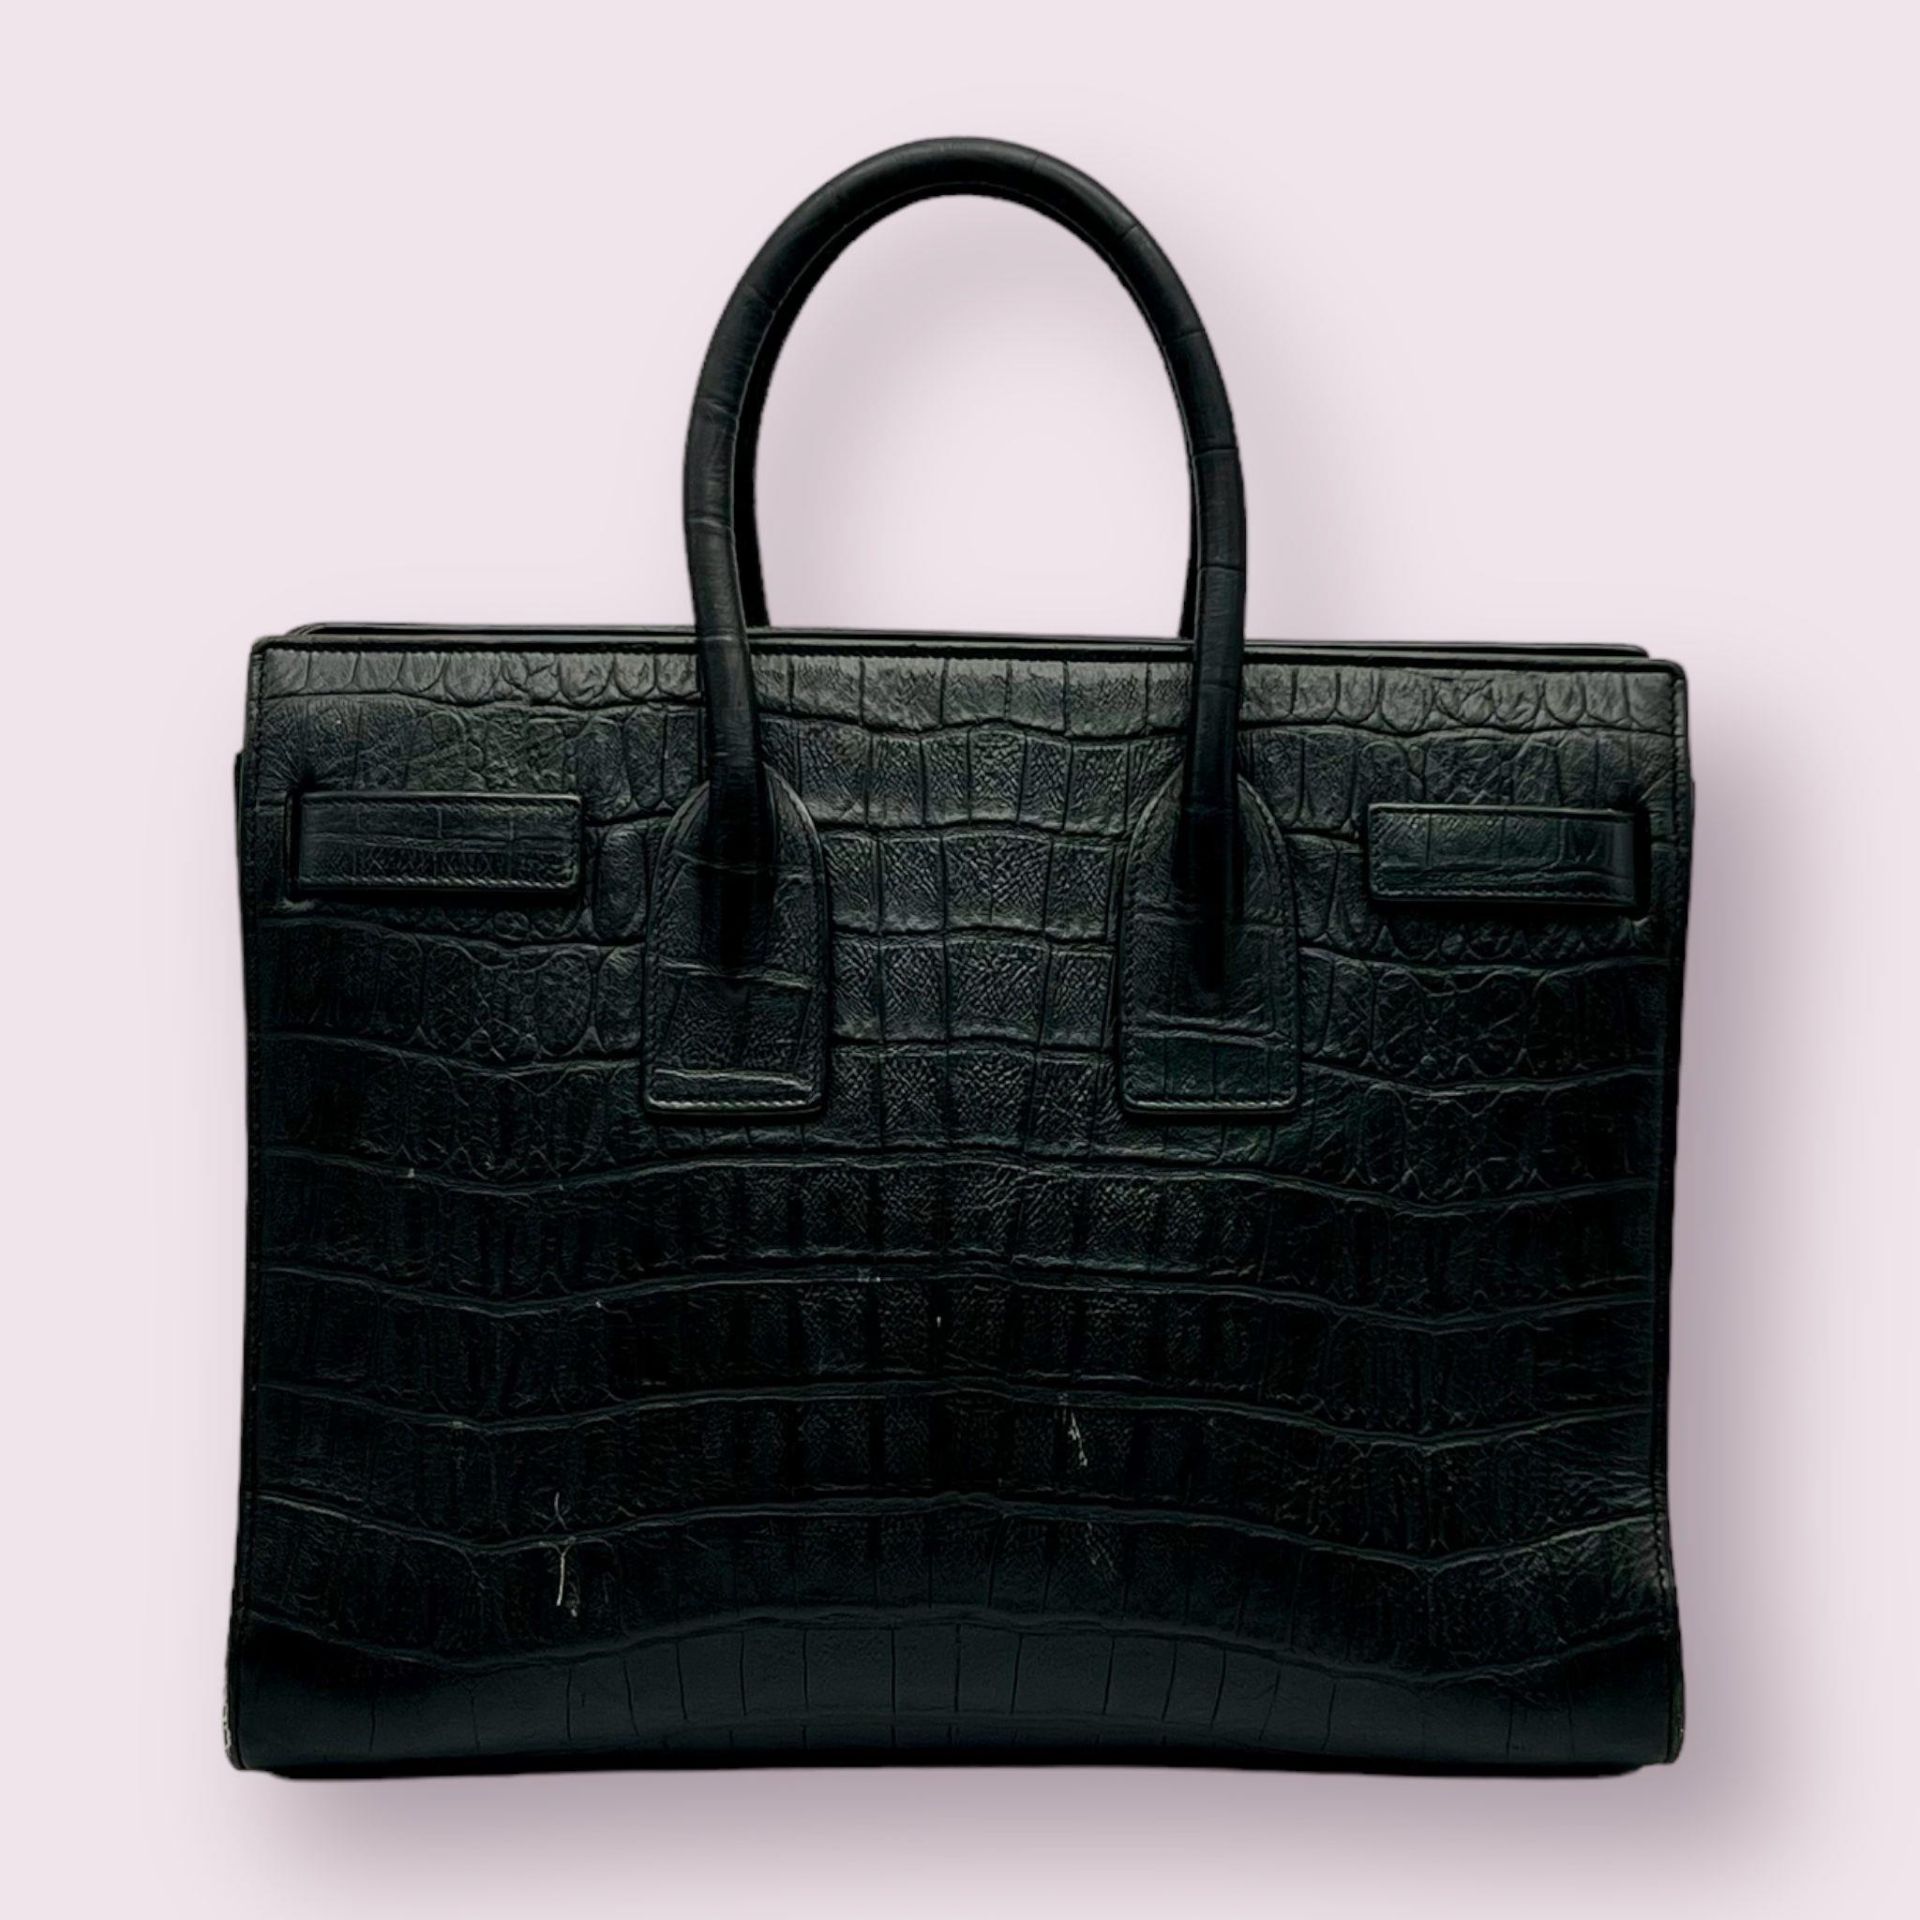 A Saint Laurent Sac de Jour Black Leather Tote Bag. Textured crocodile embossed black leather - Bild 4 aus 7